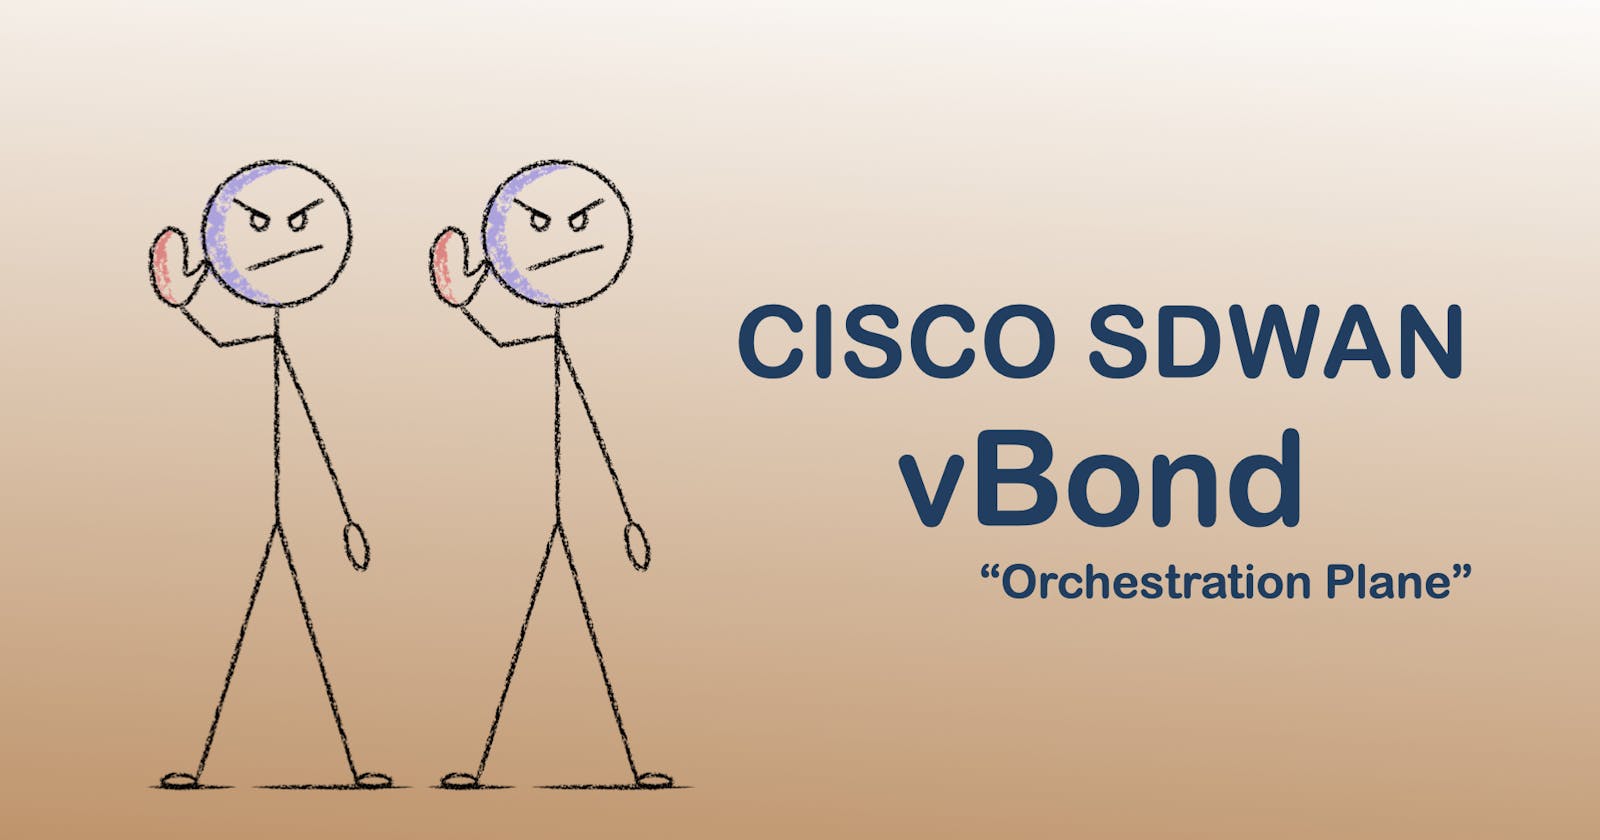 [Part 5] Cisco SDWAN - vBond Controllers